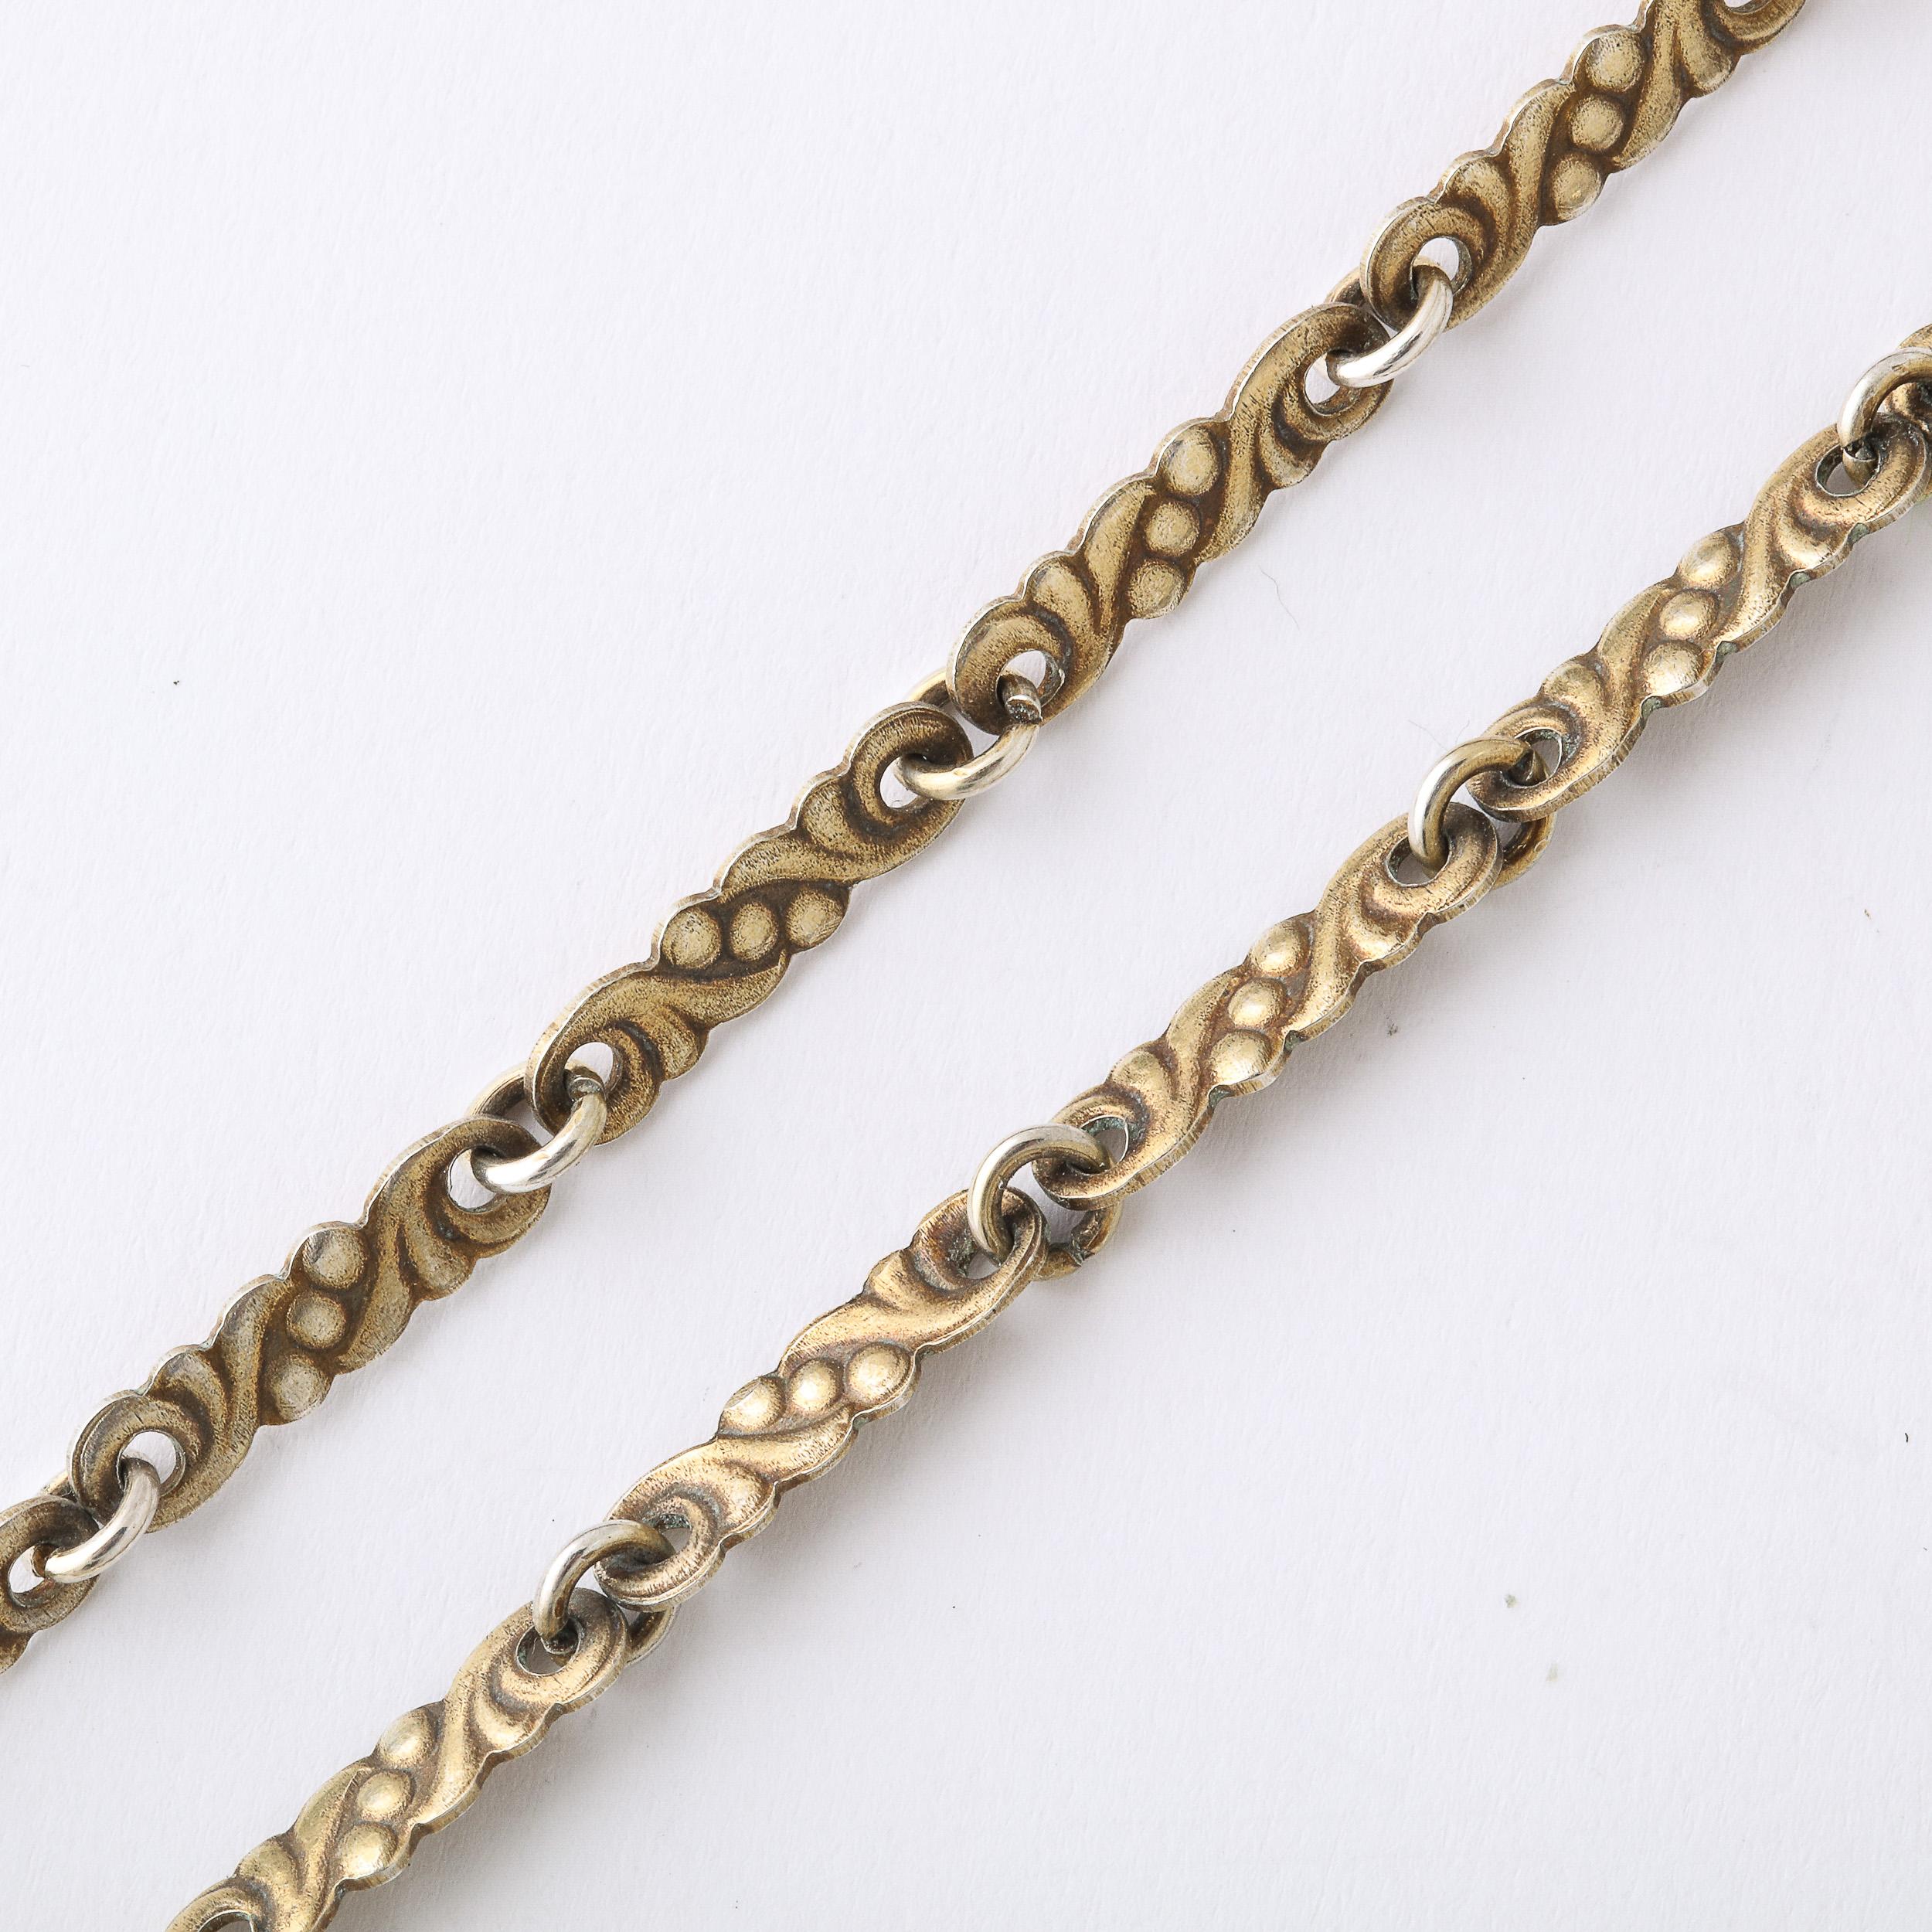 Antique Gilt Silver & Enamel Decorated Openwork Cross Pendant Necklace For Sale 2